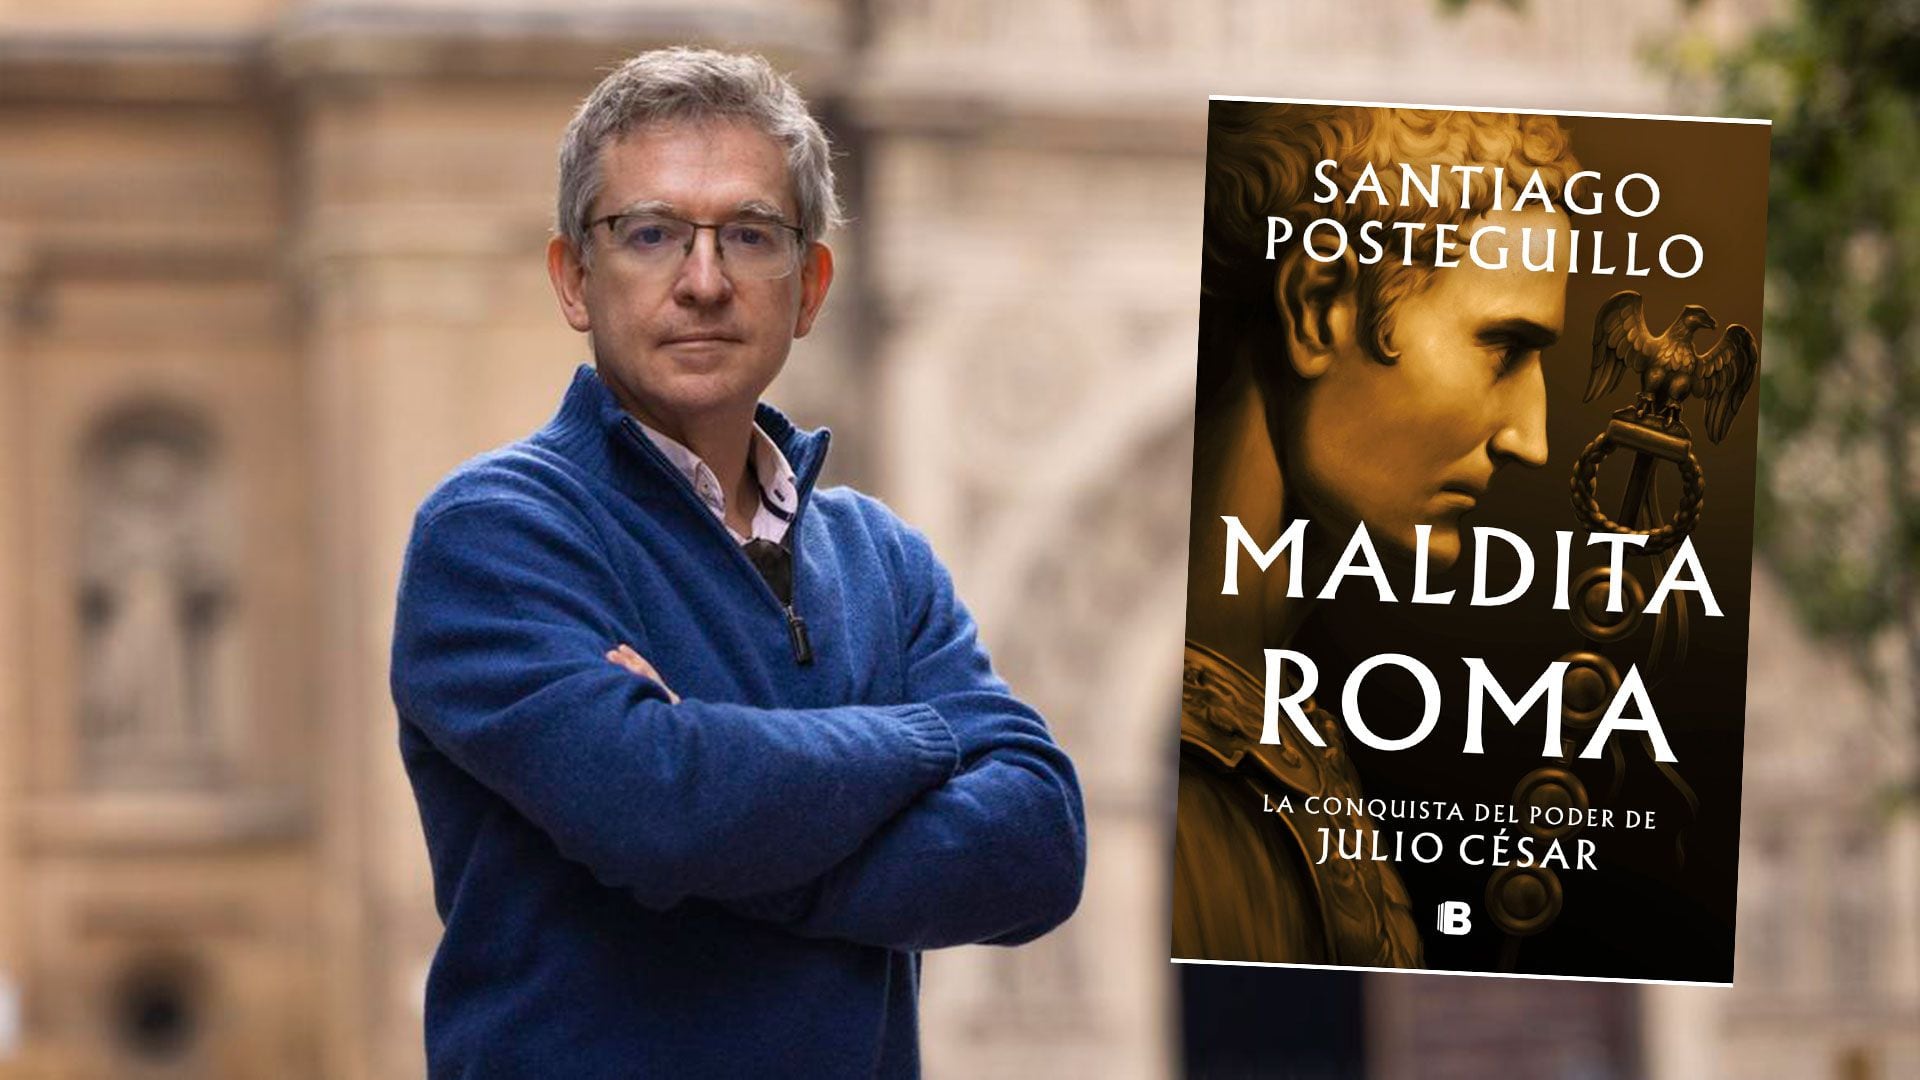 'Maldita Roma', by Santiago Posteguillo